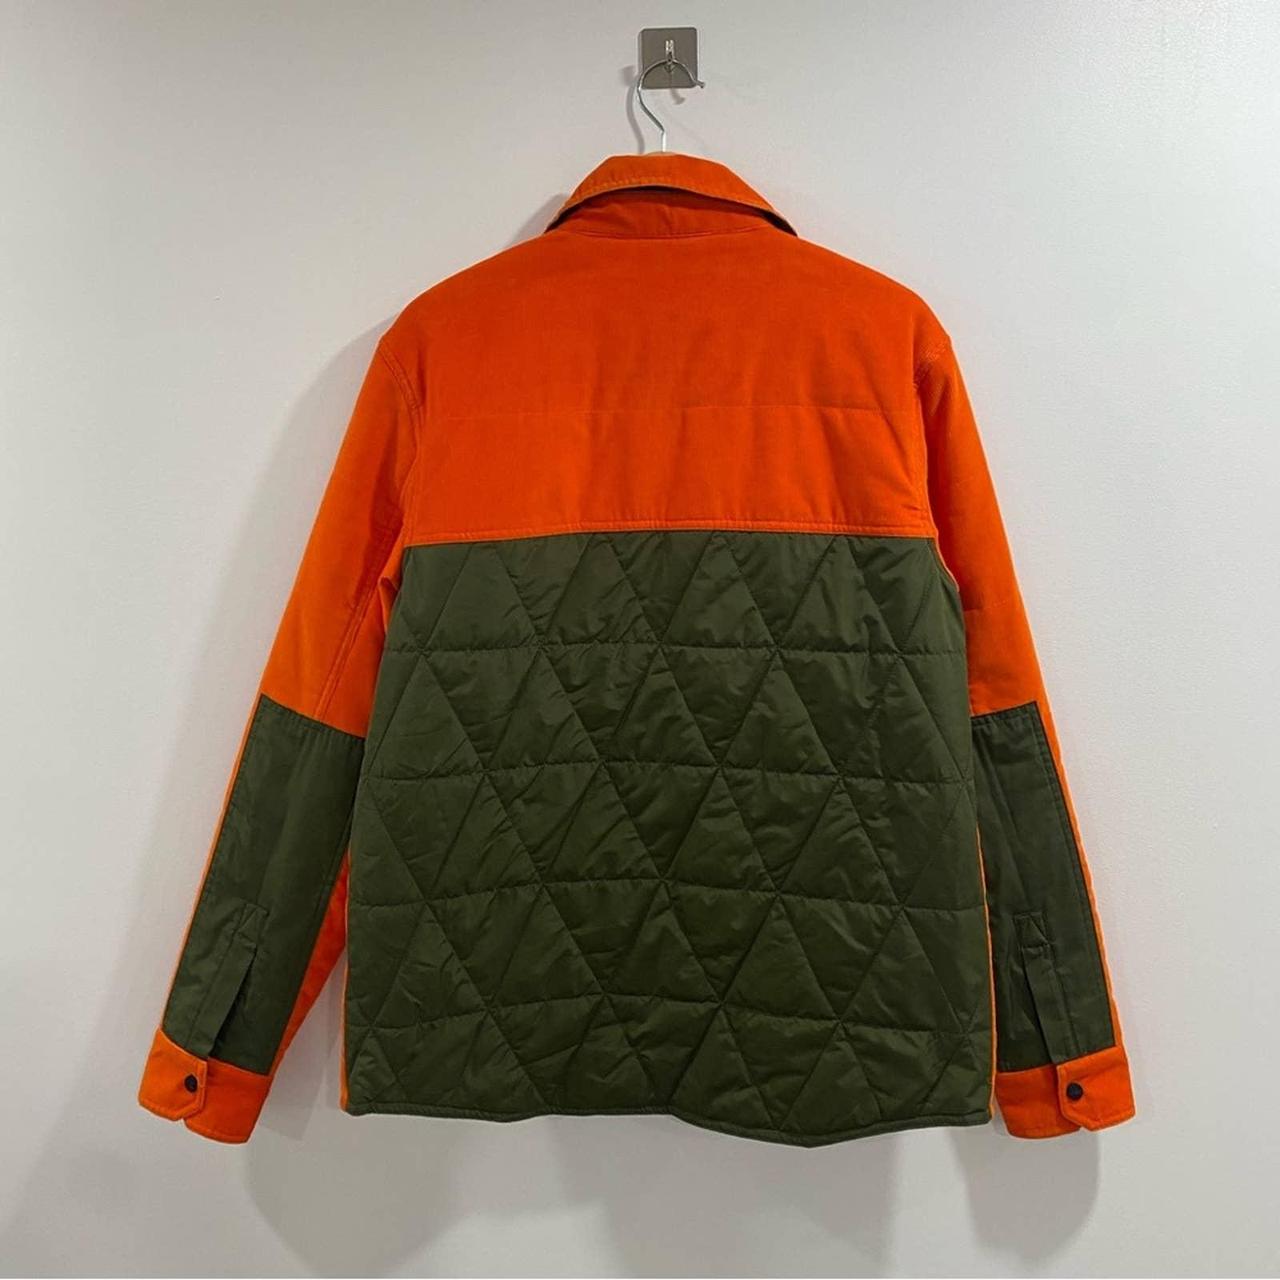 Aztech Mountain Men's Orange Jacket (3)